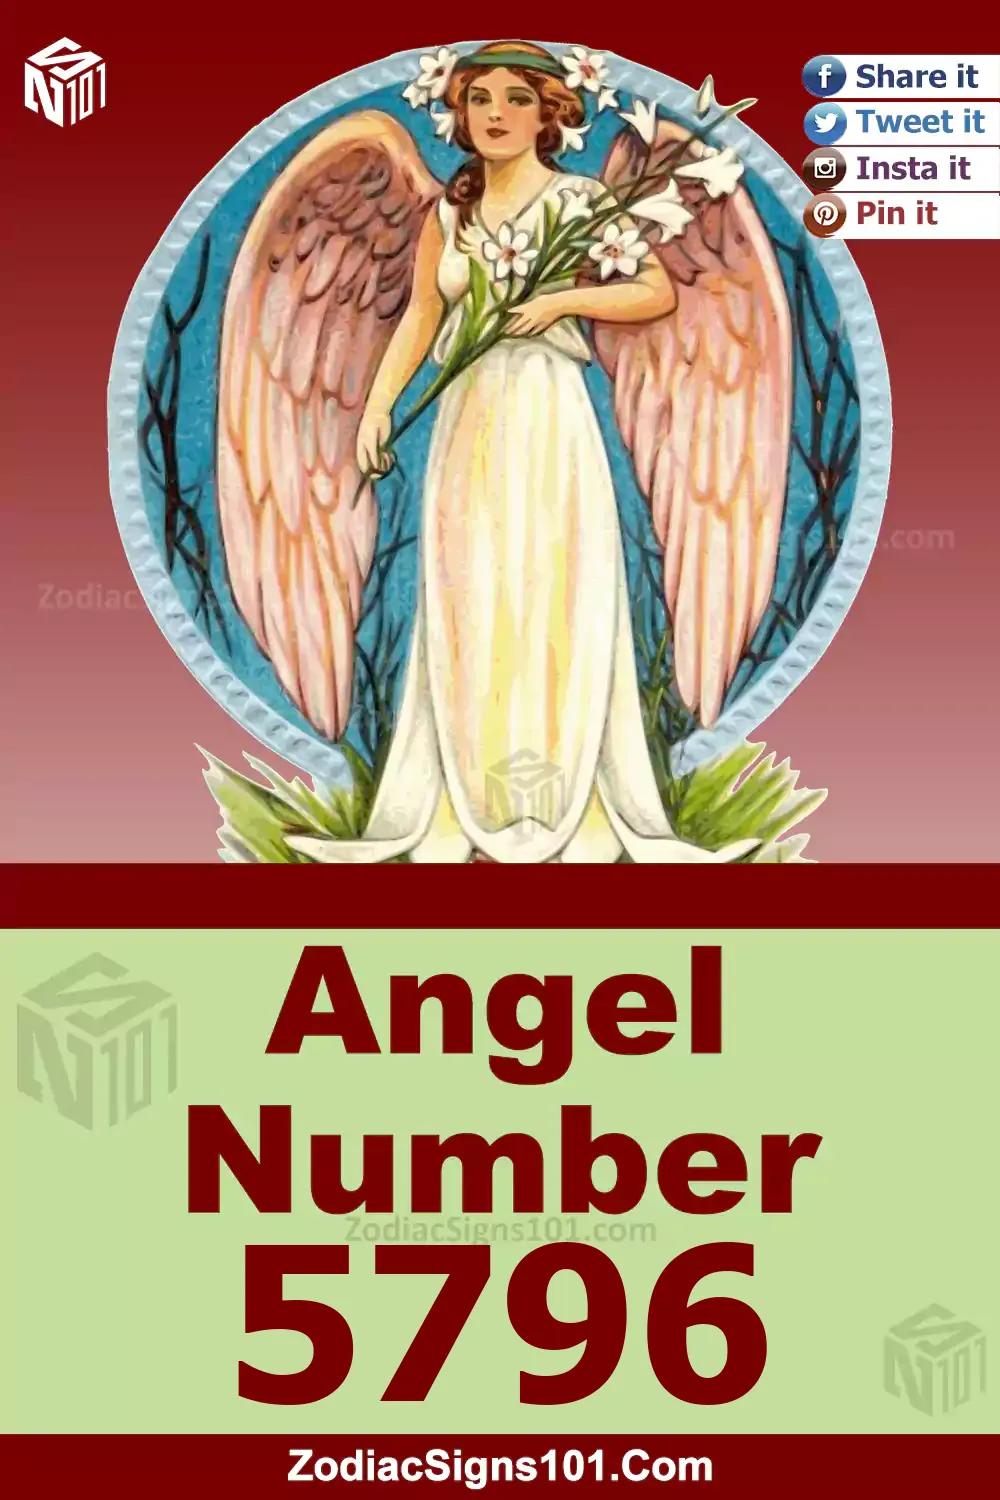 5796-Angel-Number-Meaning.jpg